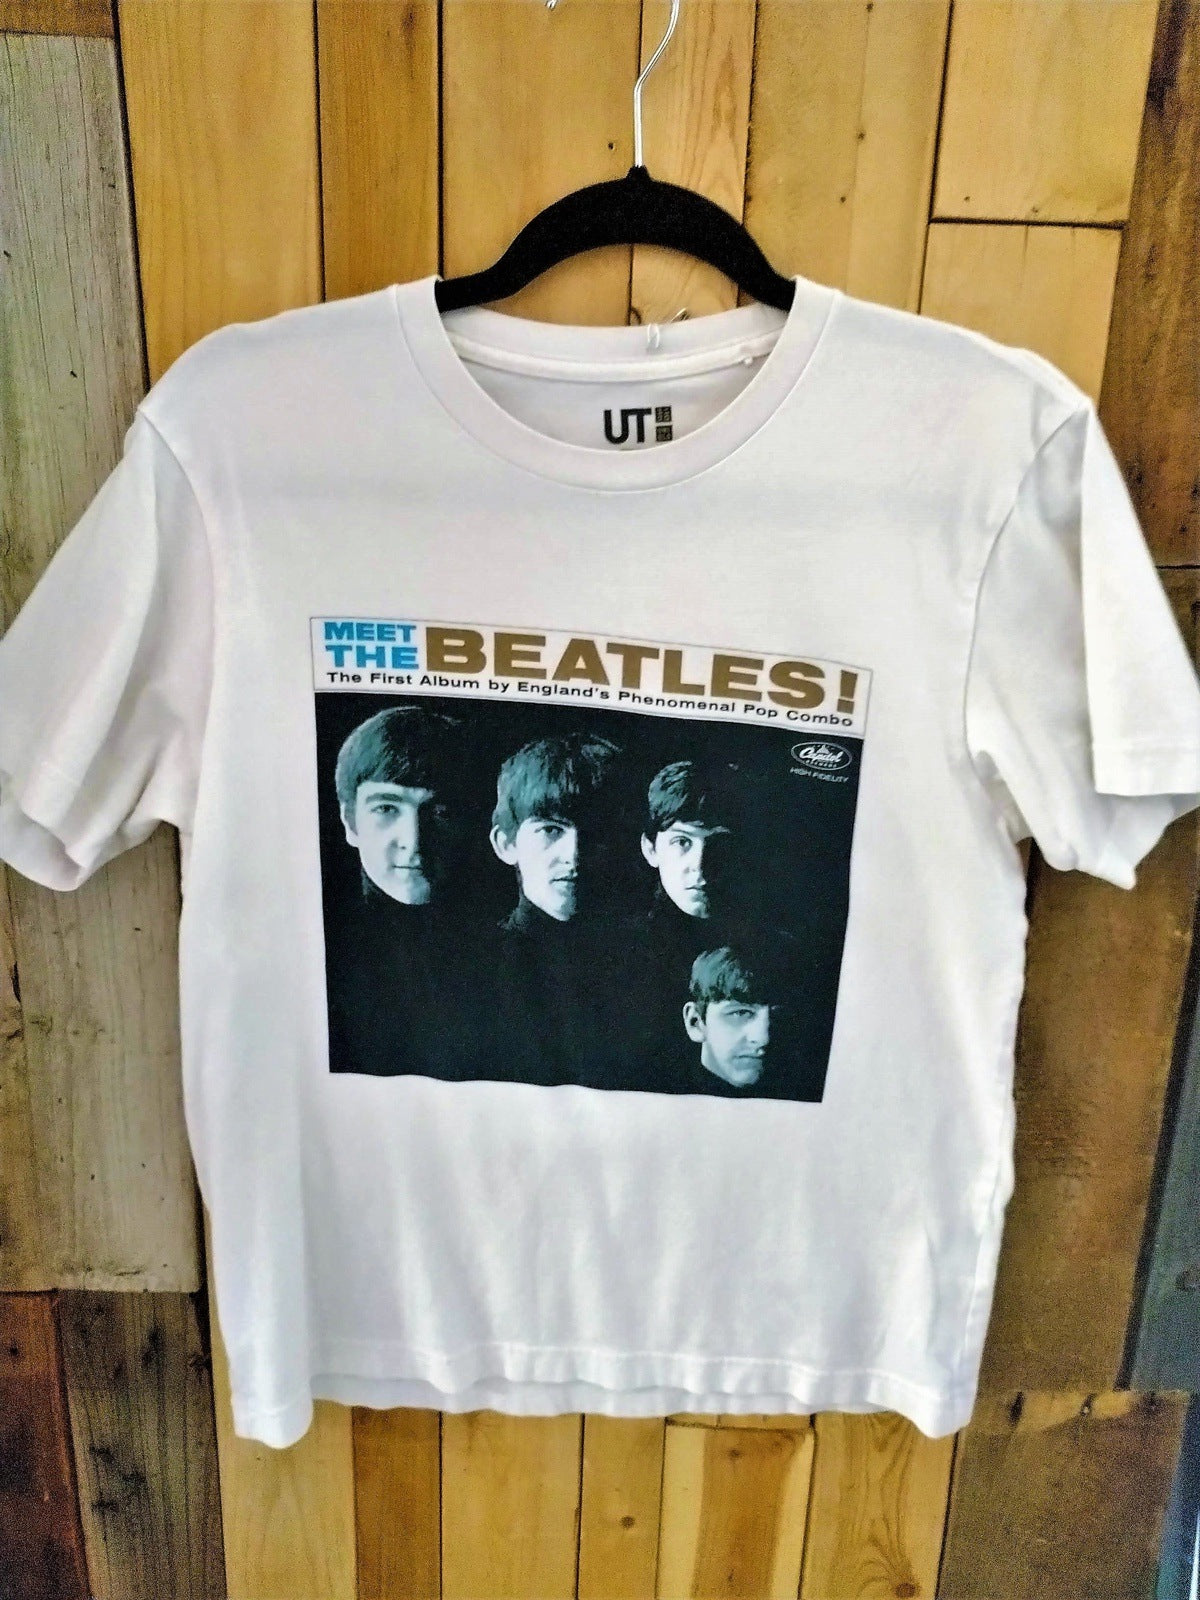 Meet The Beatles! Album Cover Tee Shirt Size XS